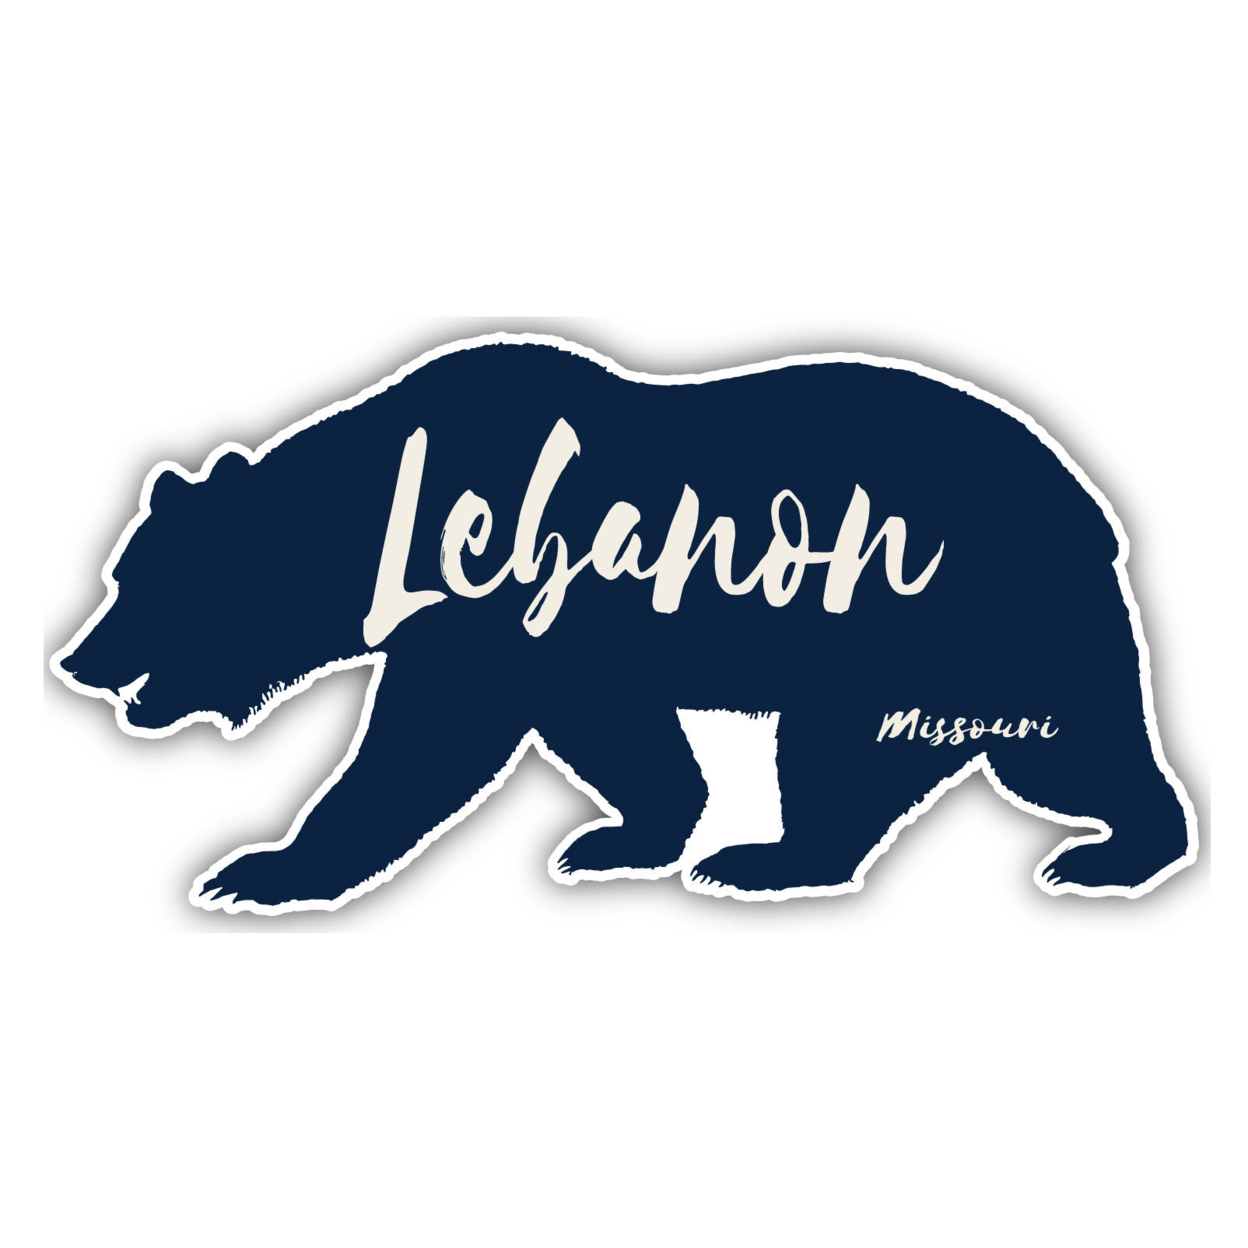 Lebanon Missouri Souvenir Decorative Stickers (Choose Theme And Size) - 2-Inch, Bear